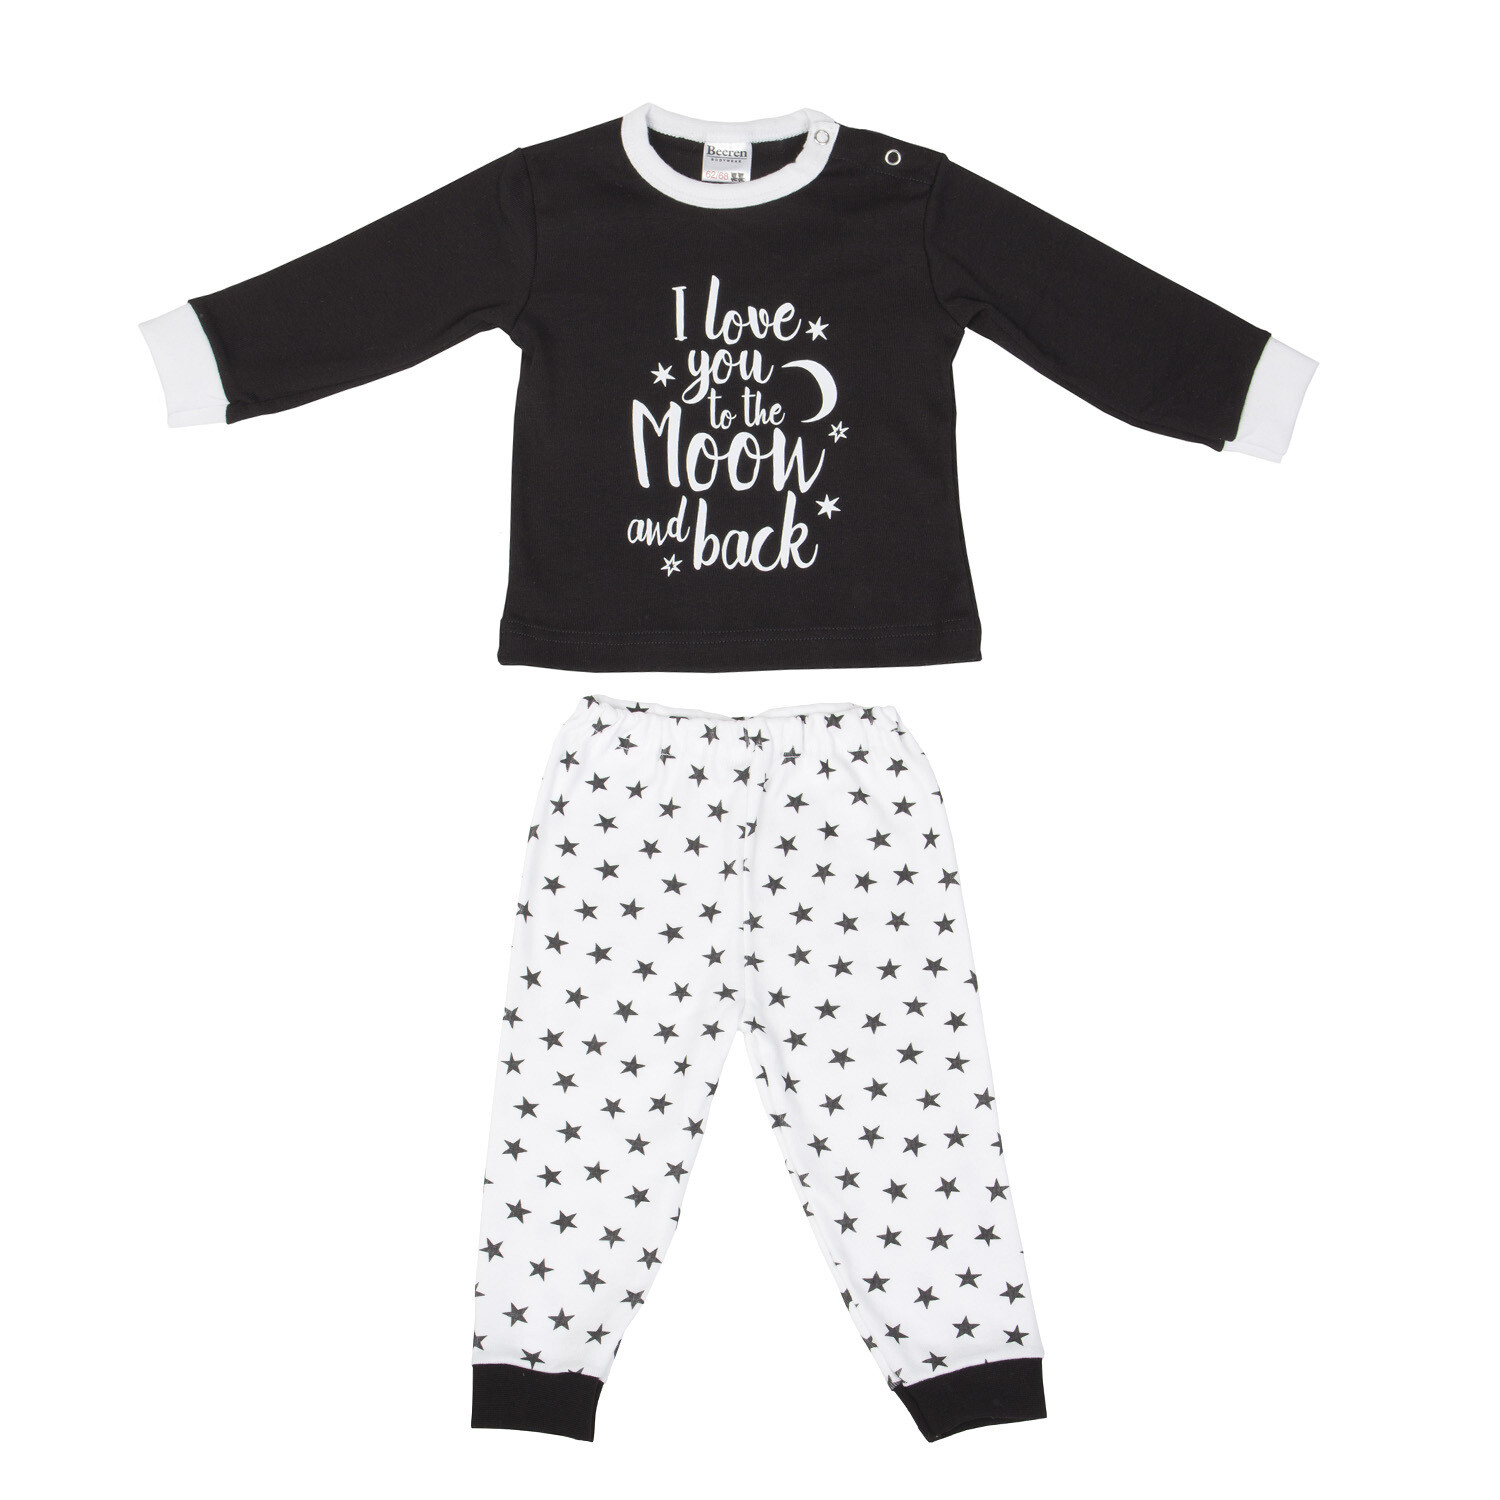 (24-020) Baby pyjama Love you zwart 86/92, Size: 86/92, Color: zwart